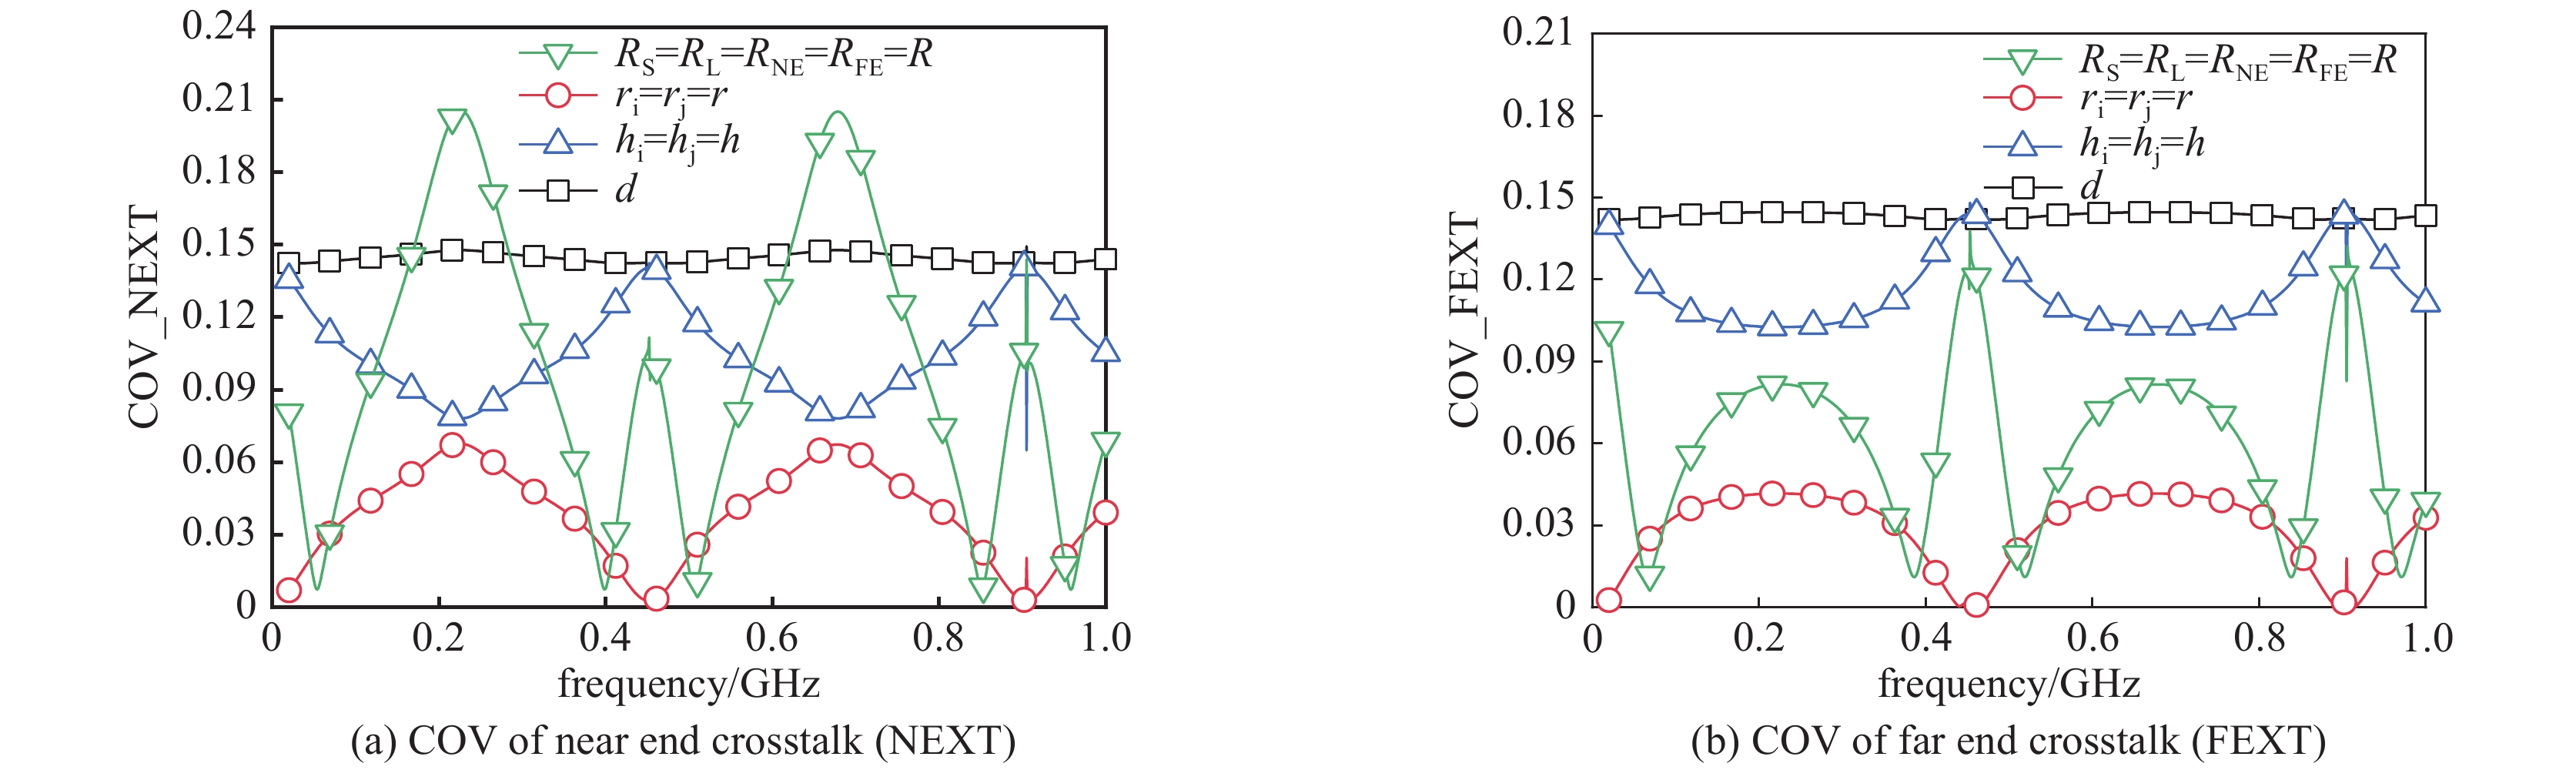 Three-conductor crosstalk sensitivity analysis results